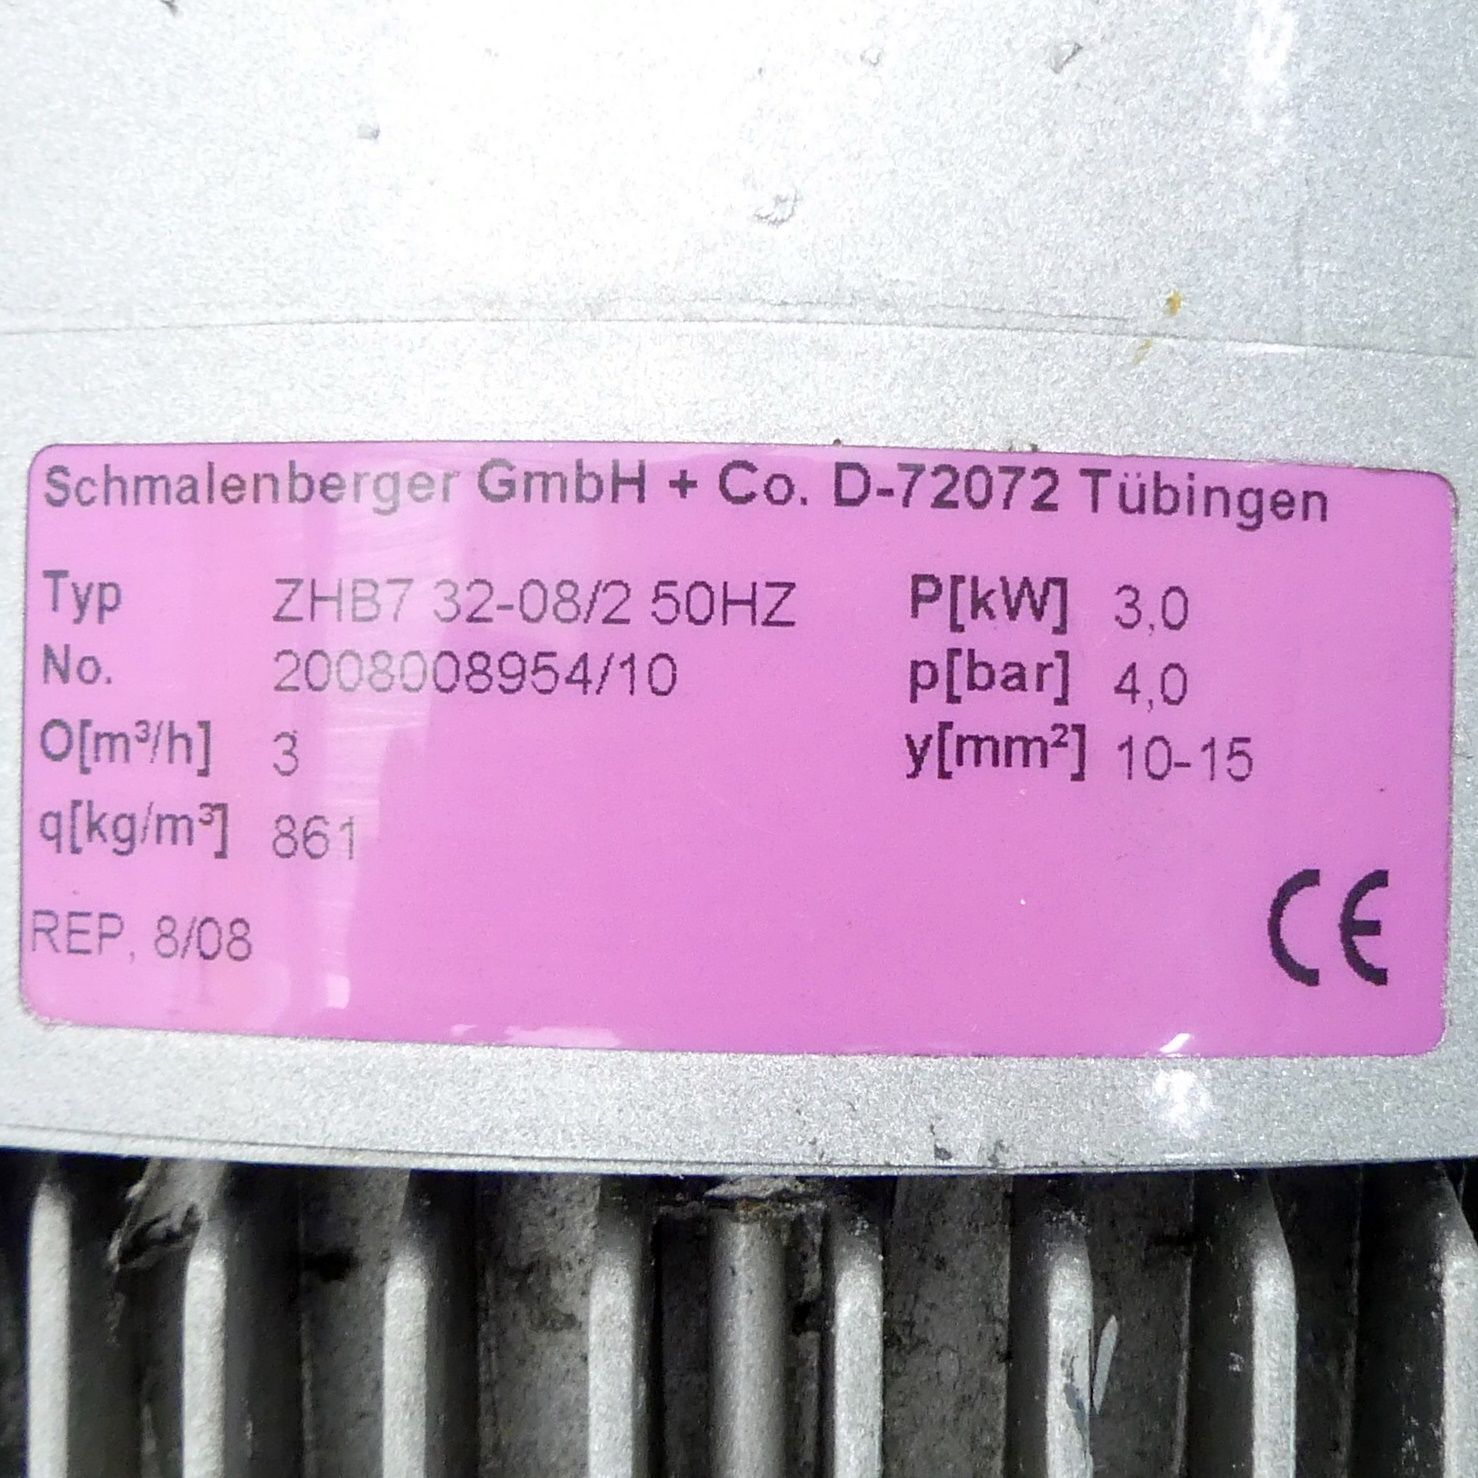 Centrifugal pump ZHB7 32-08/2 